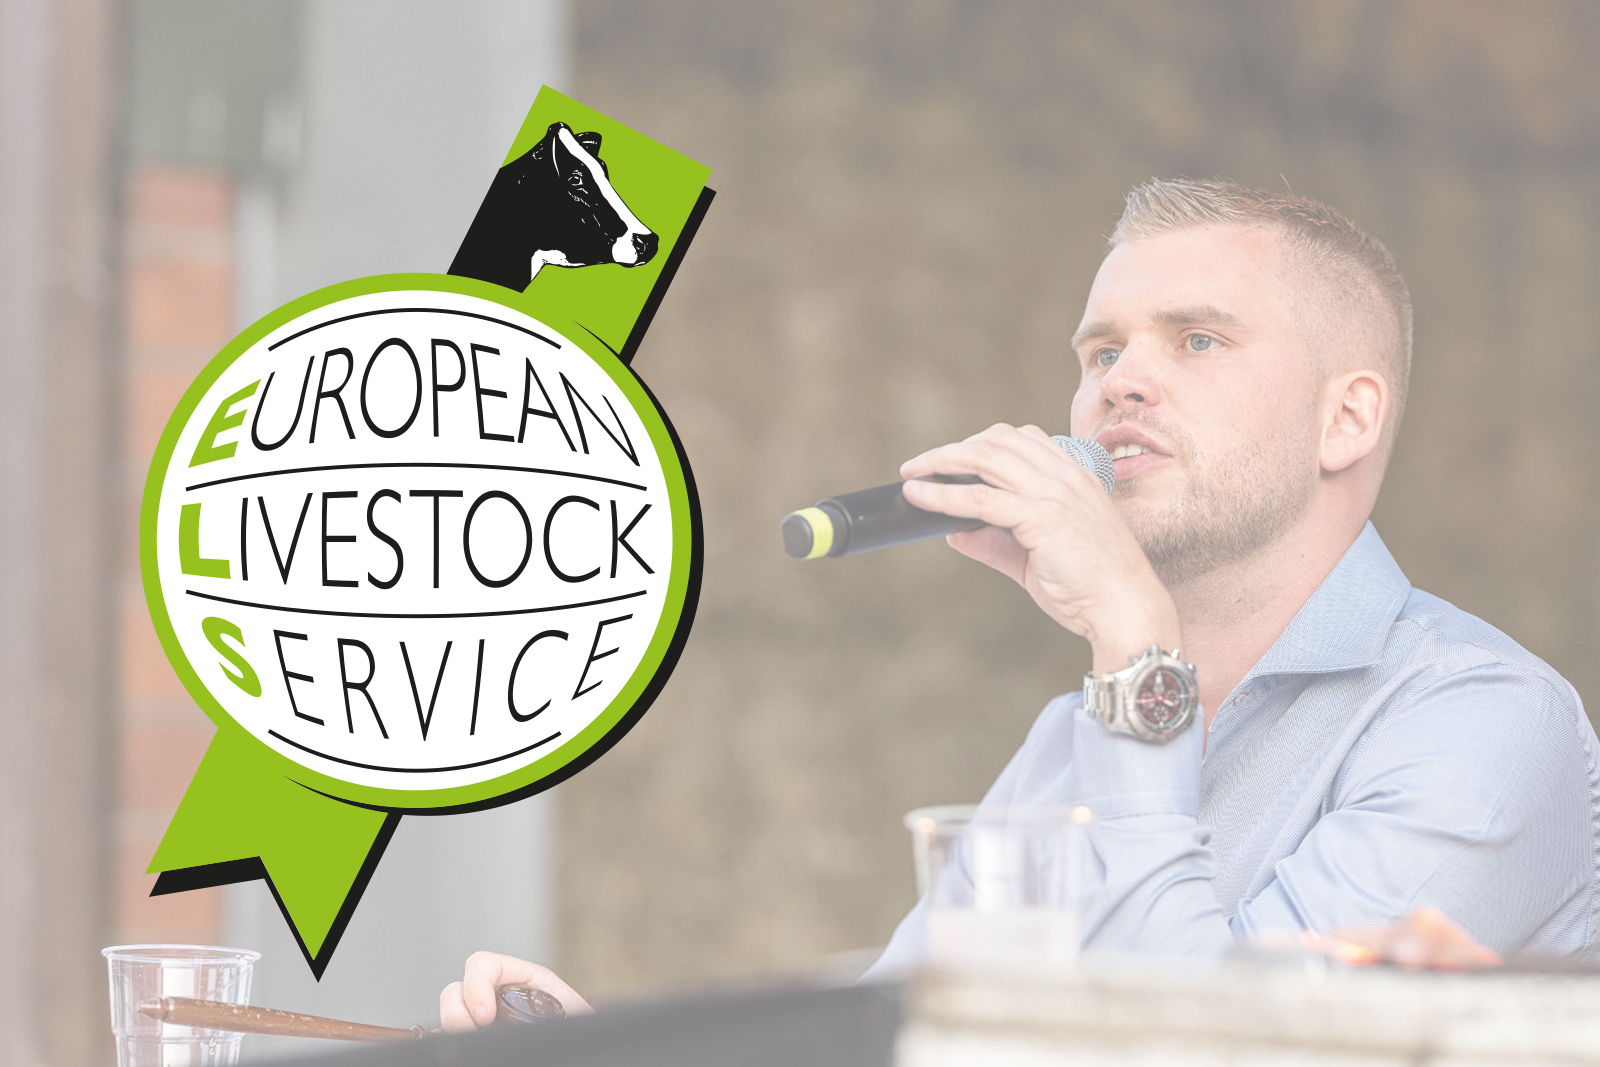 European Livestock Service GmbH & Co. KG